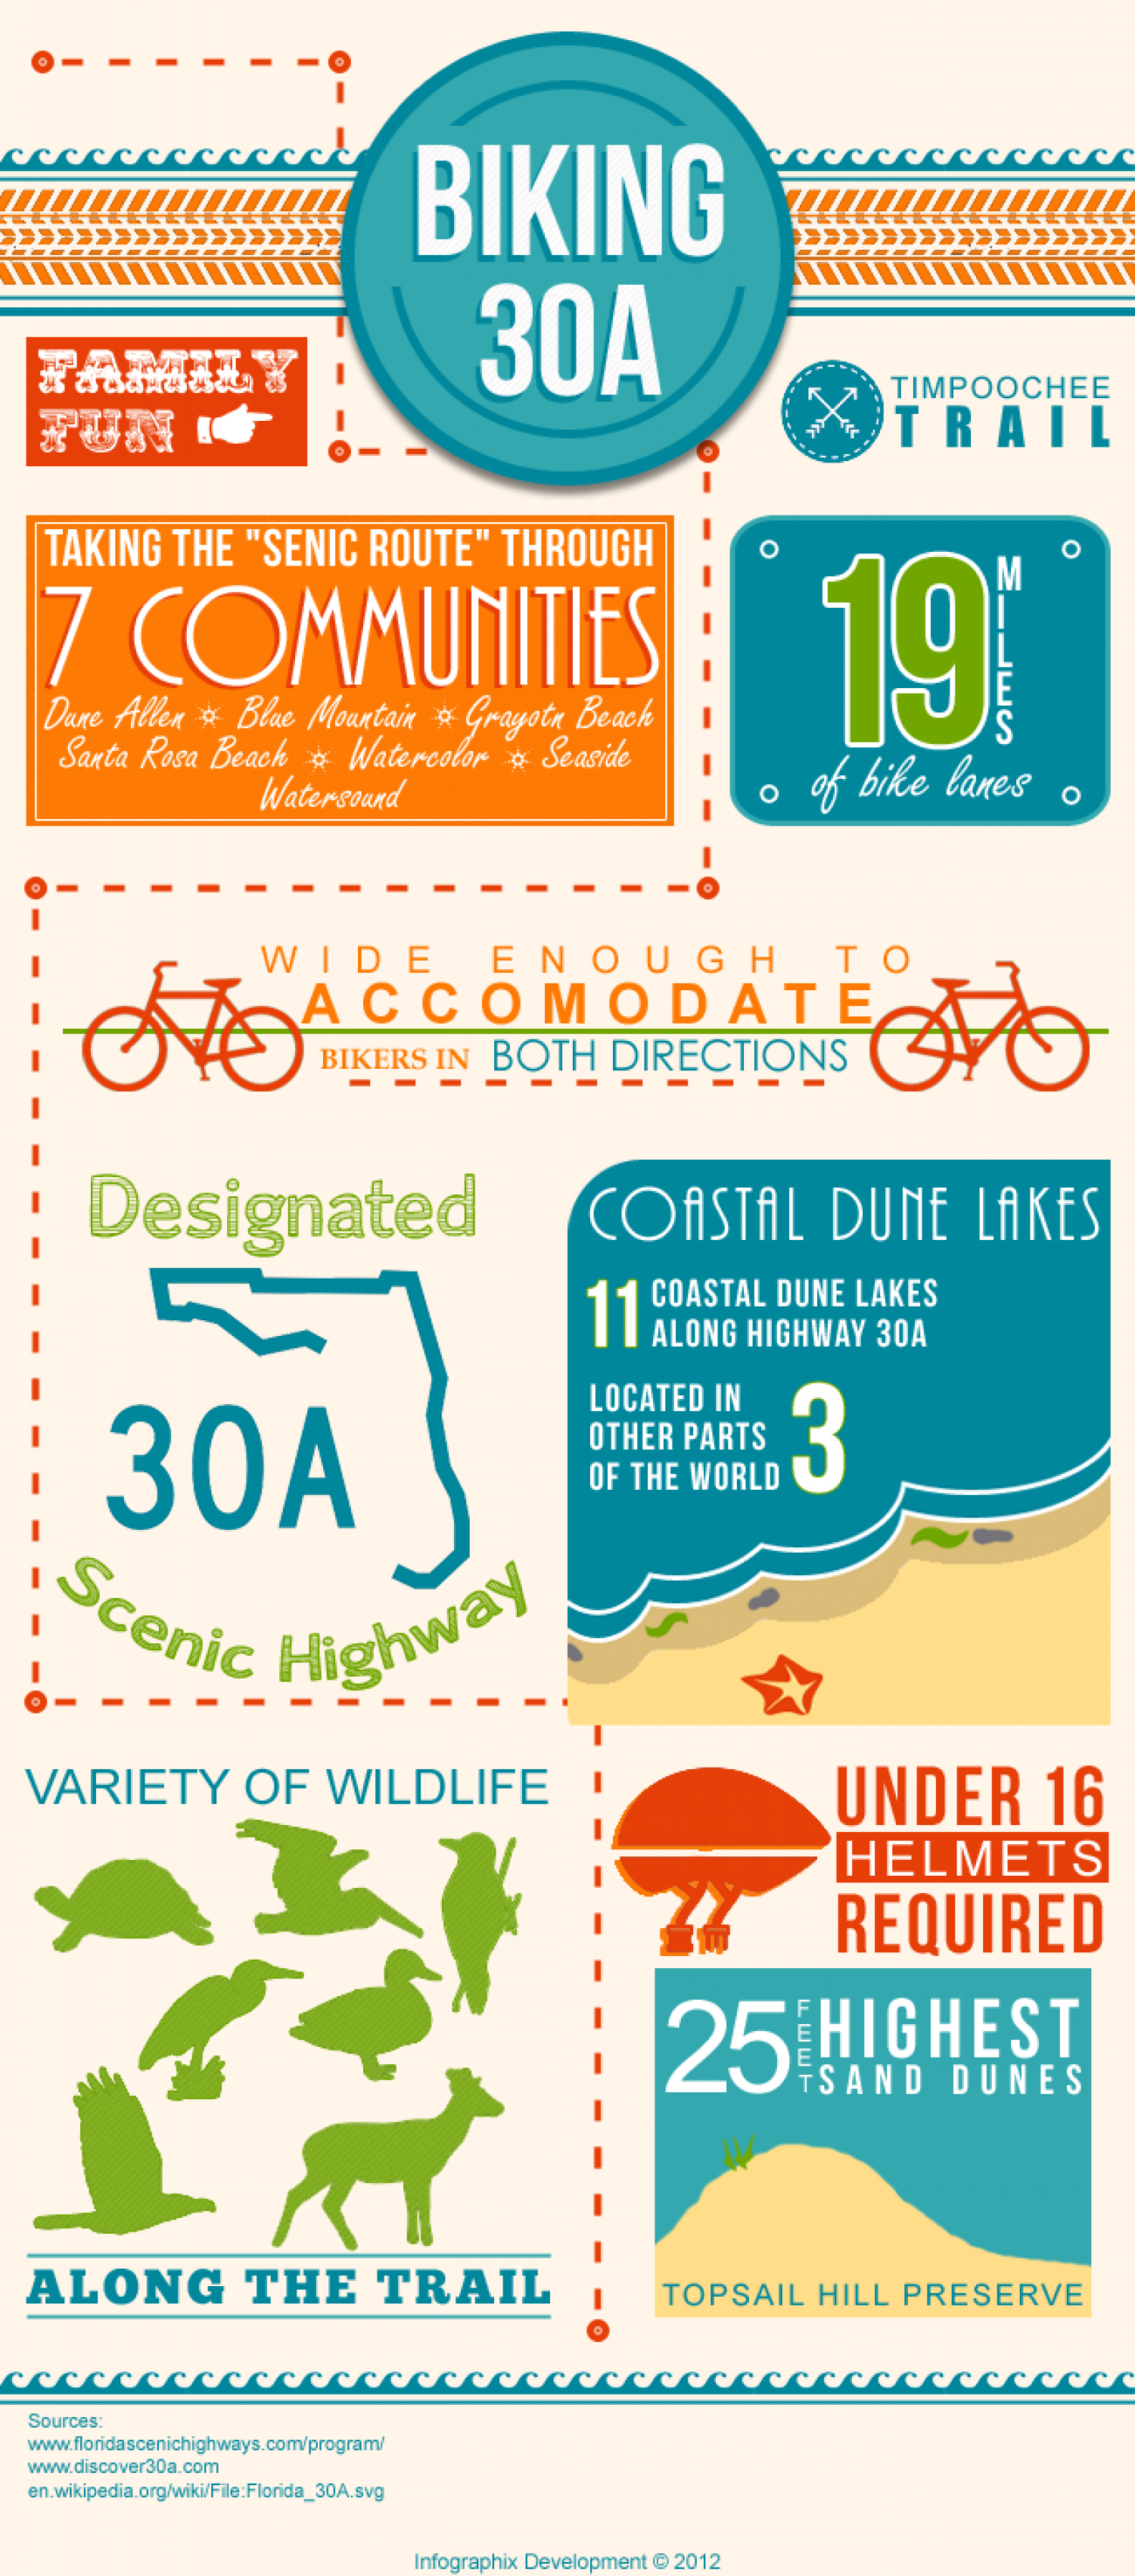 Biking Timpoochee Trail Infographic